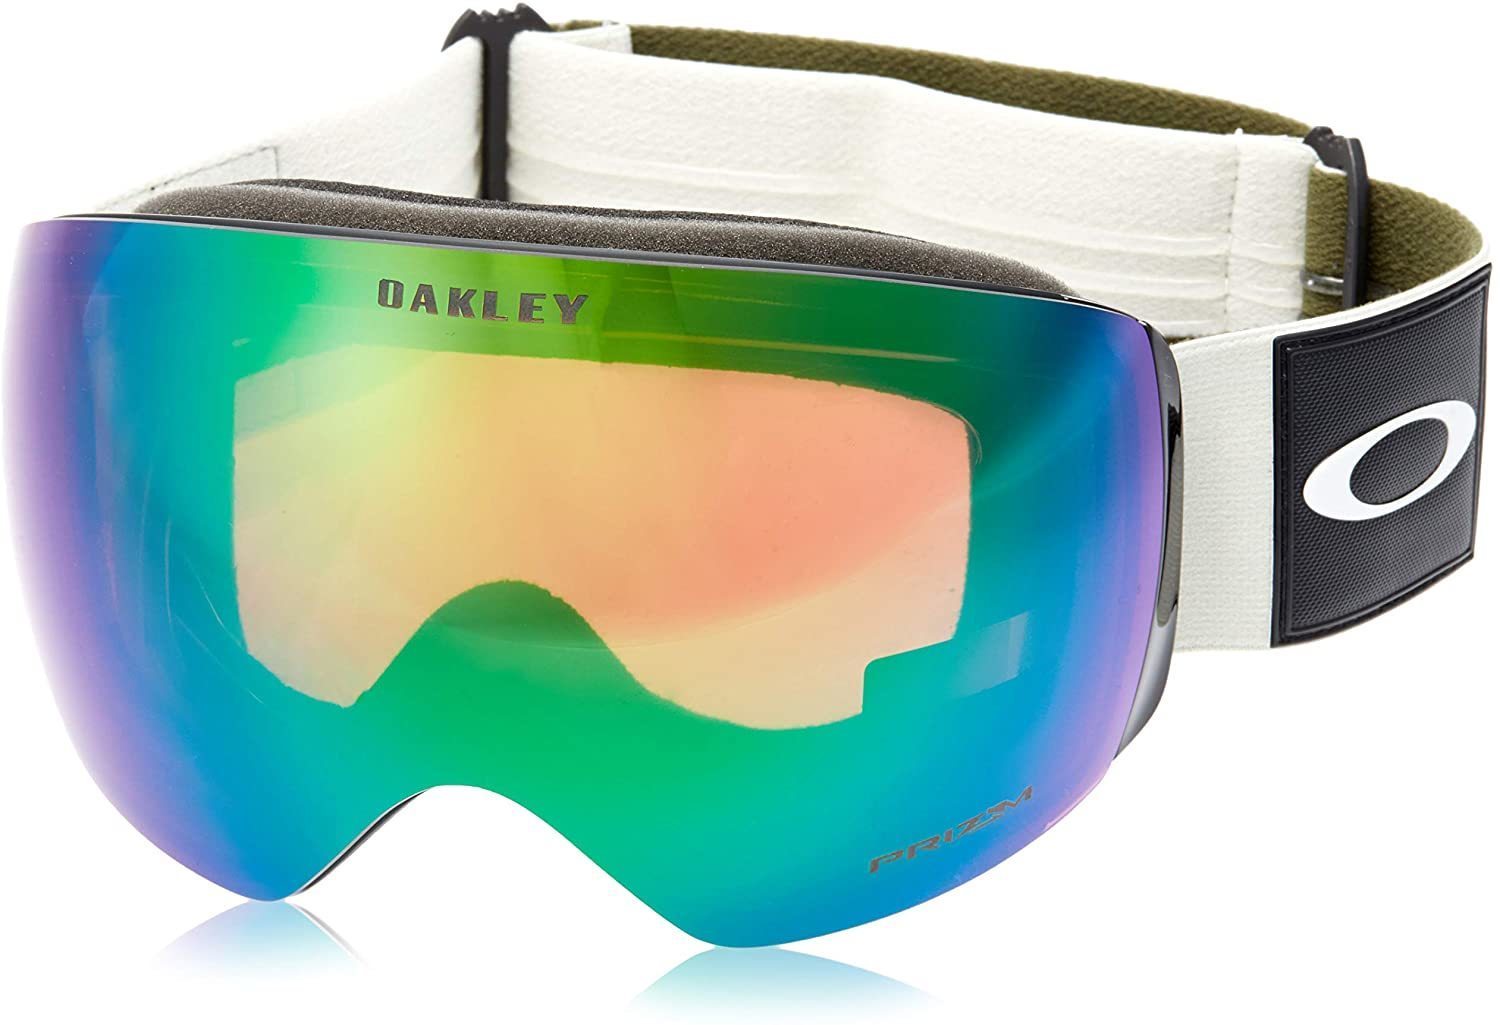 Oakley Prizm Snow Jade Iridium Lens Goggles